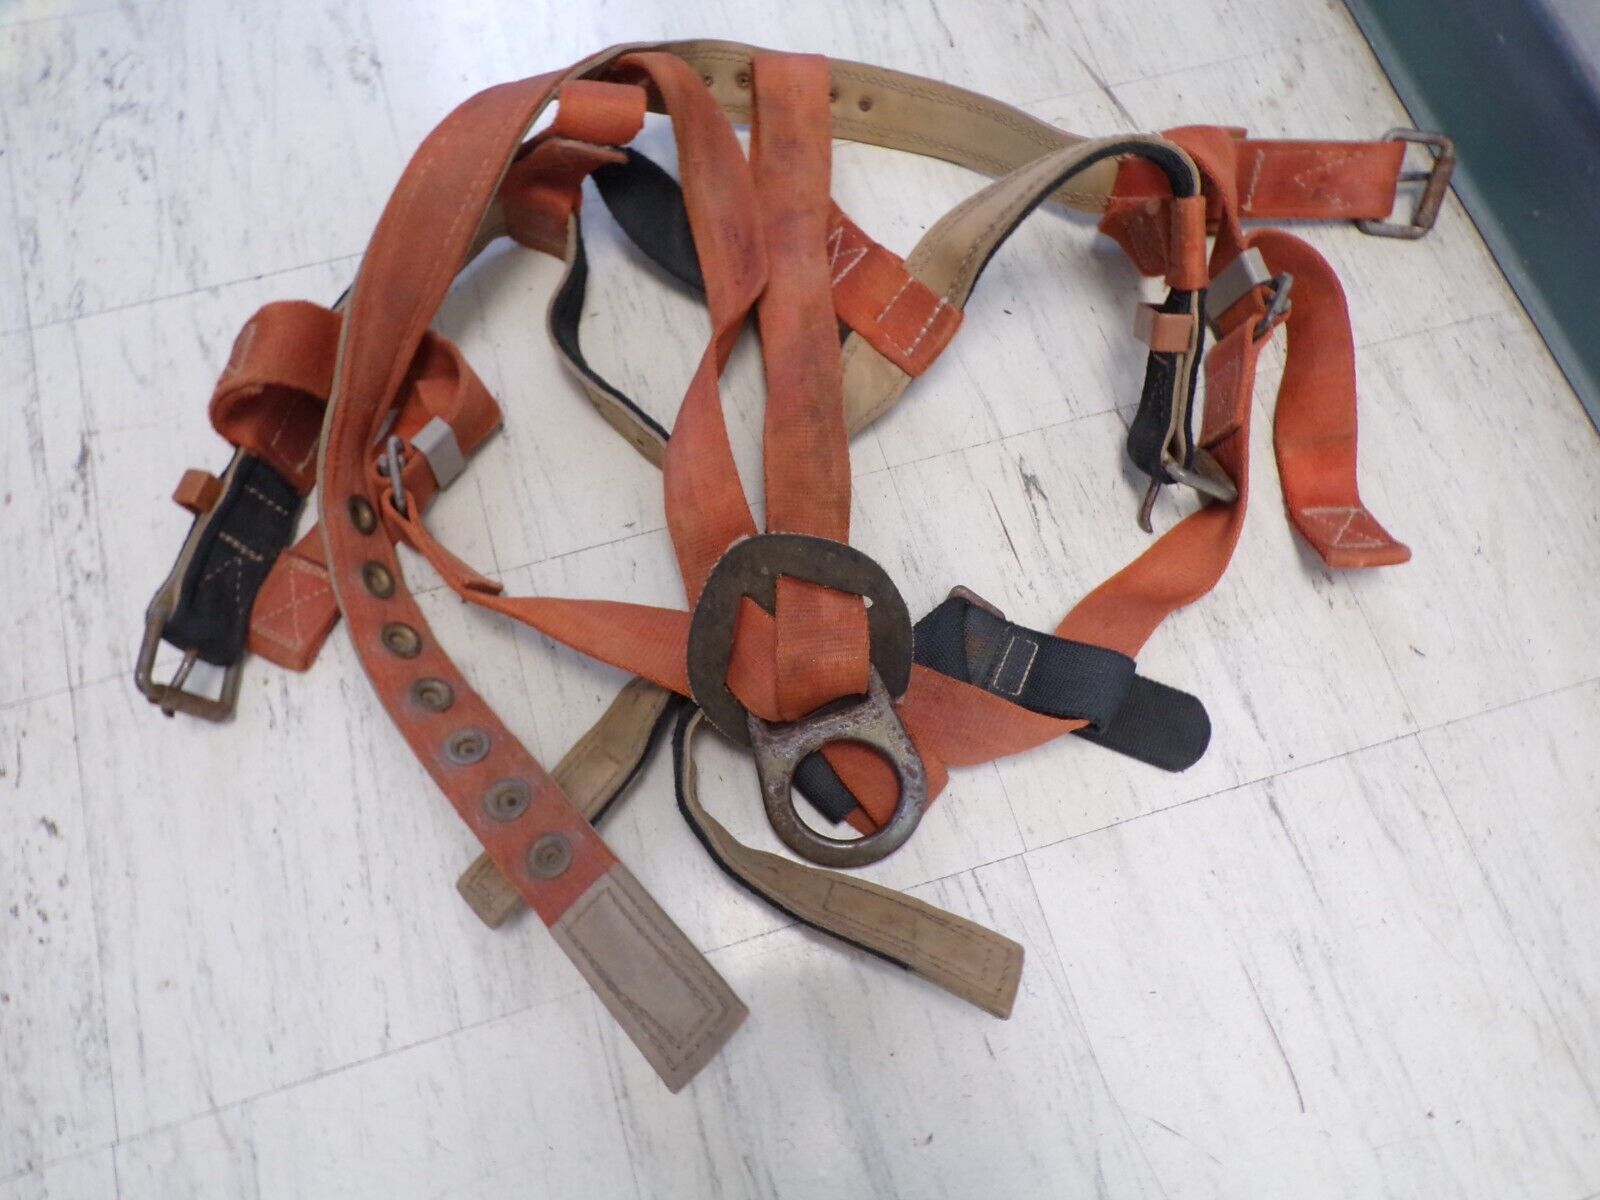 Klein Leather Lineman Pole Climbing Safety Tool Belt & Gaffs?? + Extras 1996